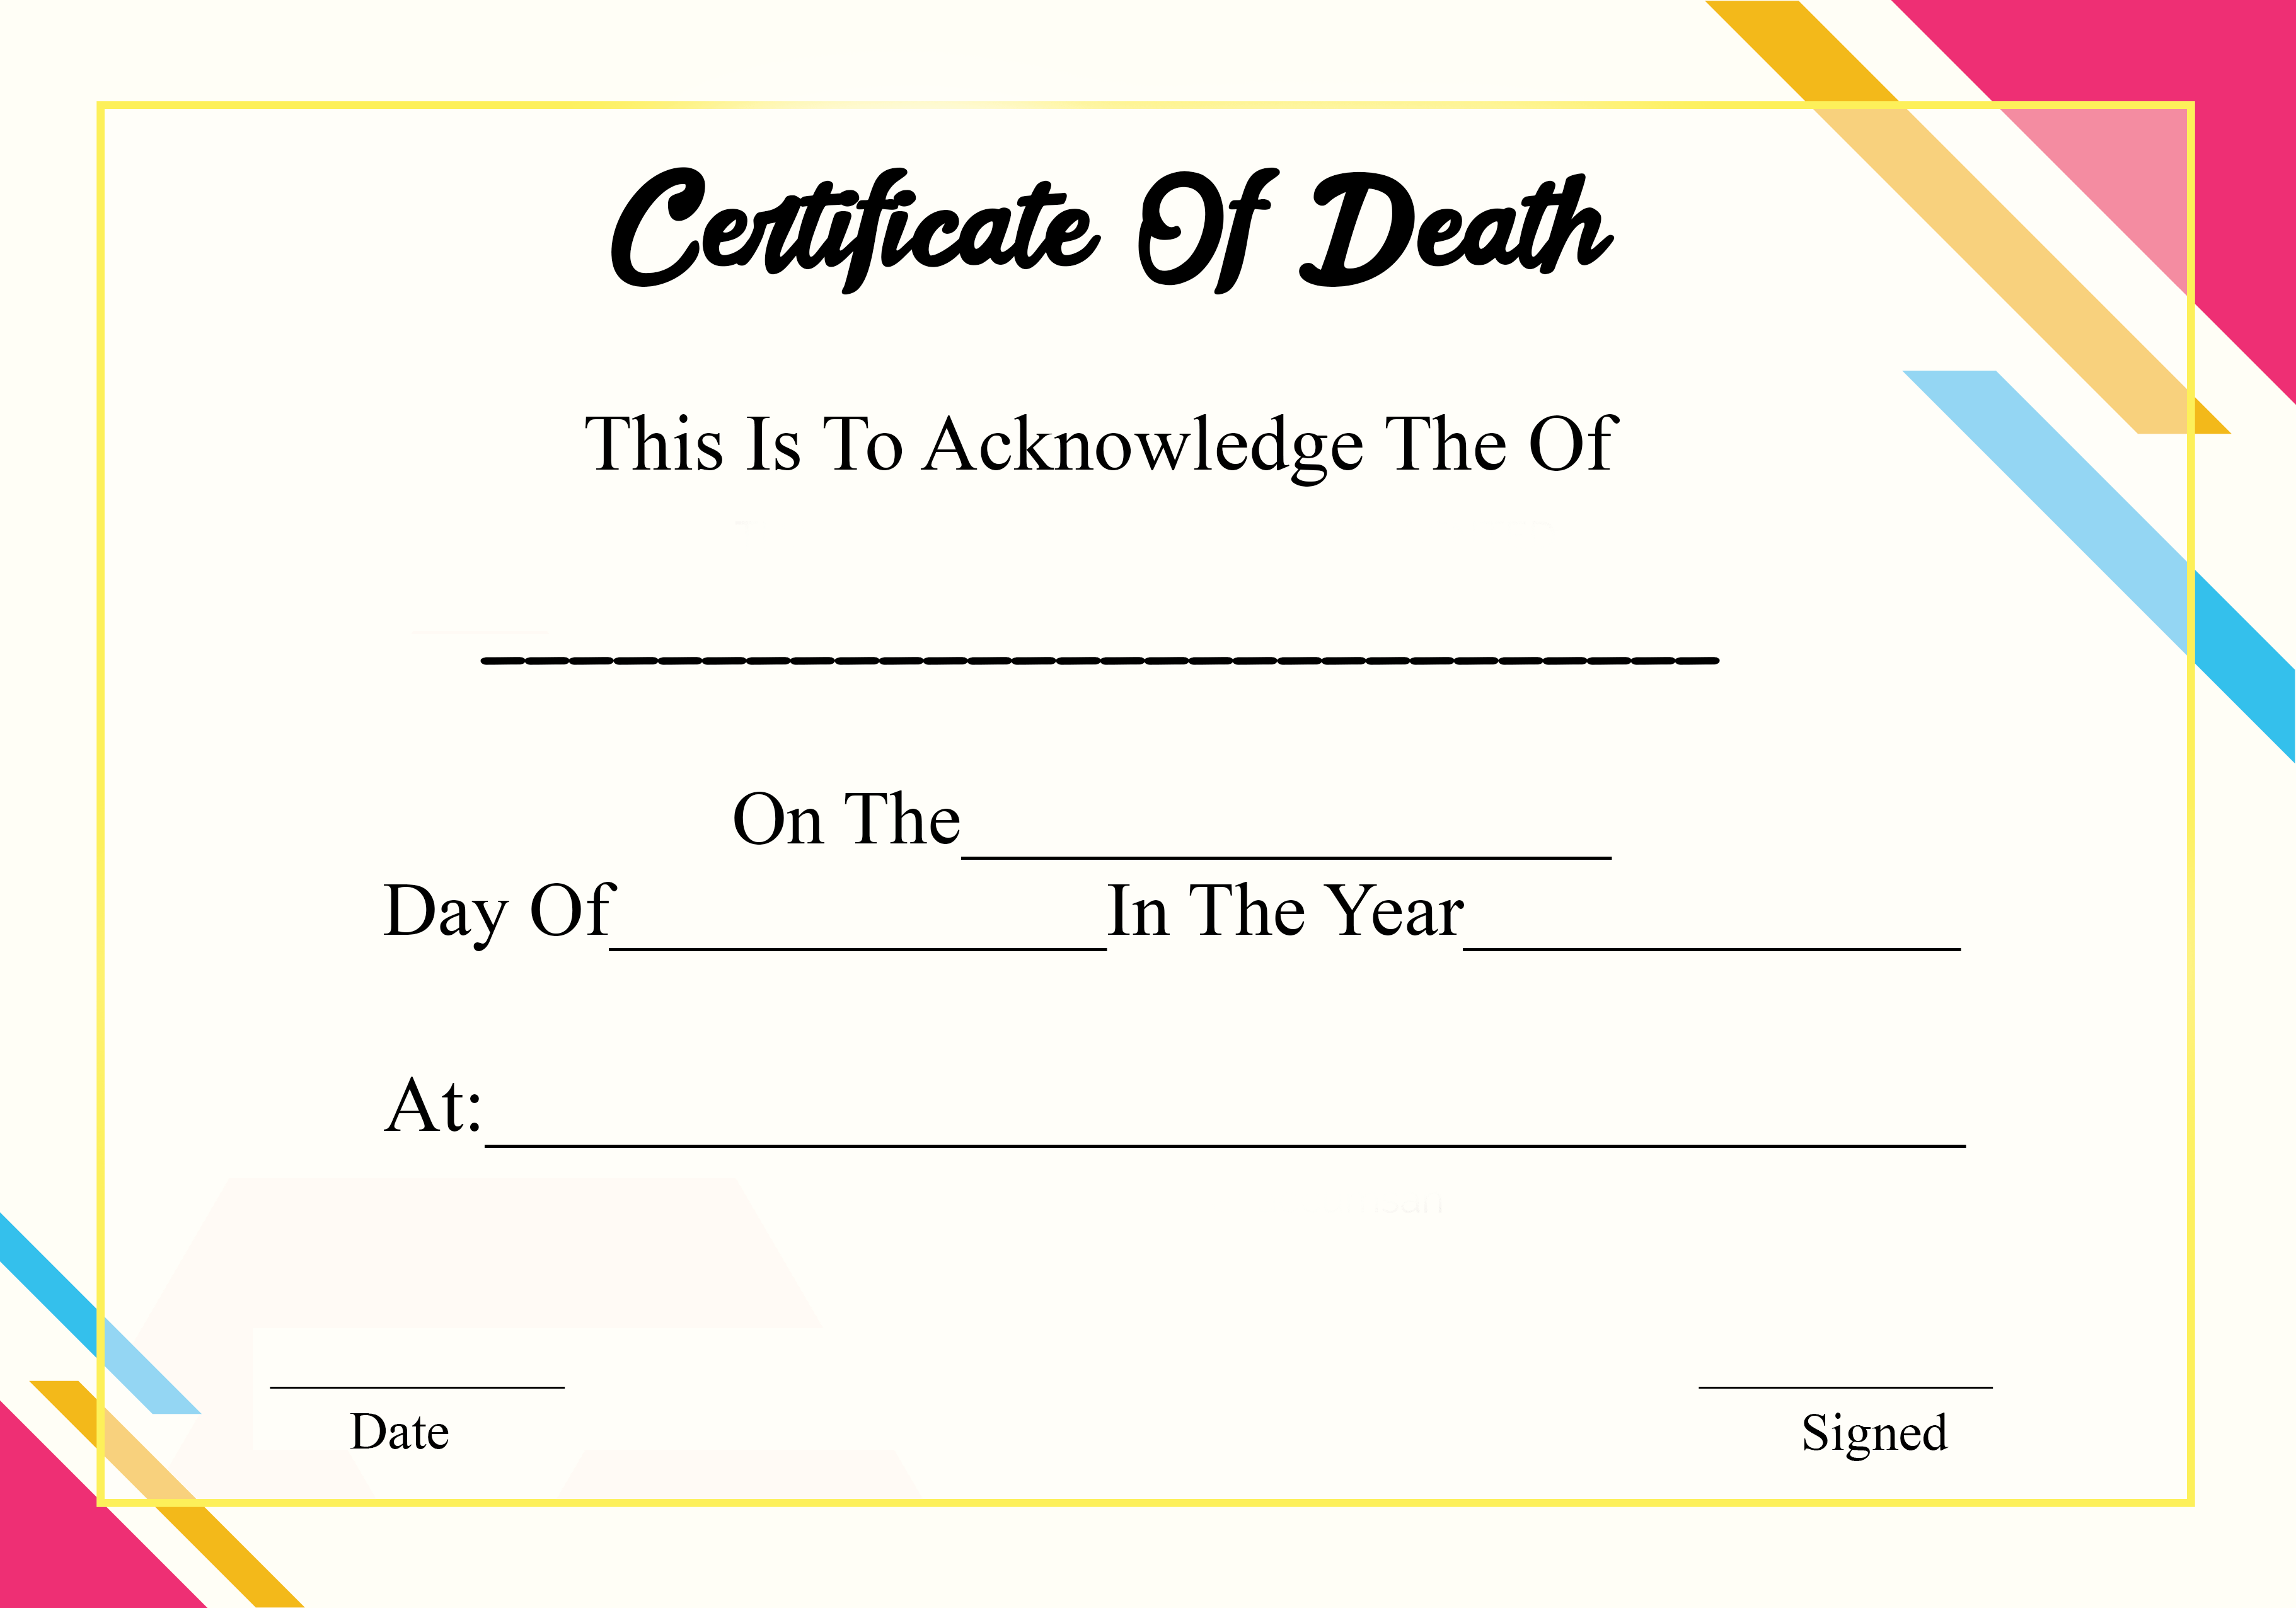 Certificate Of Death Template 